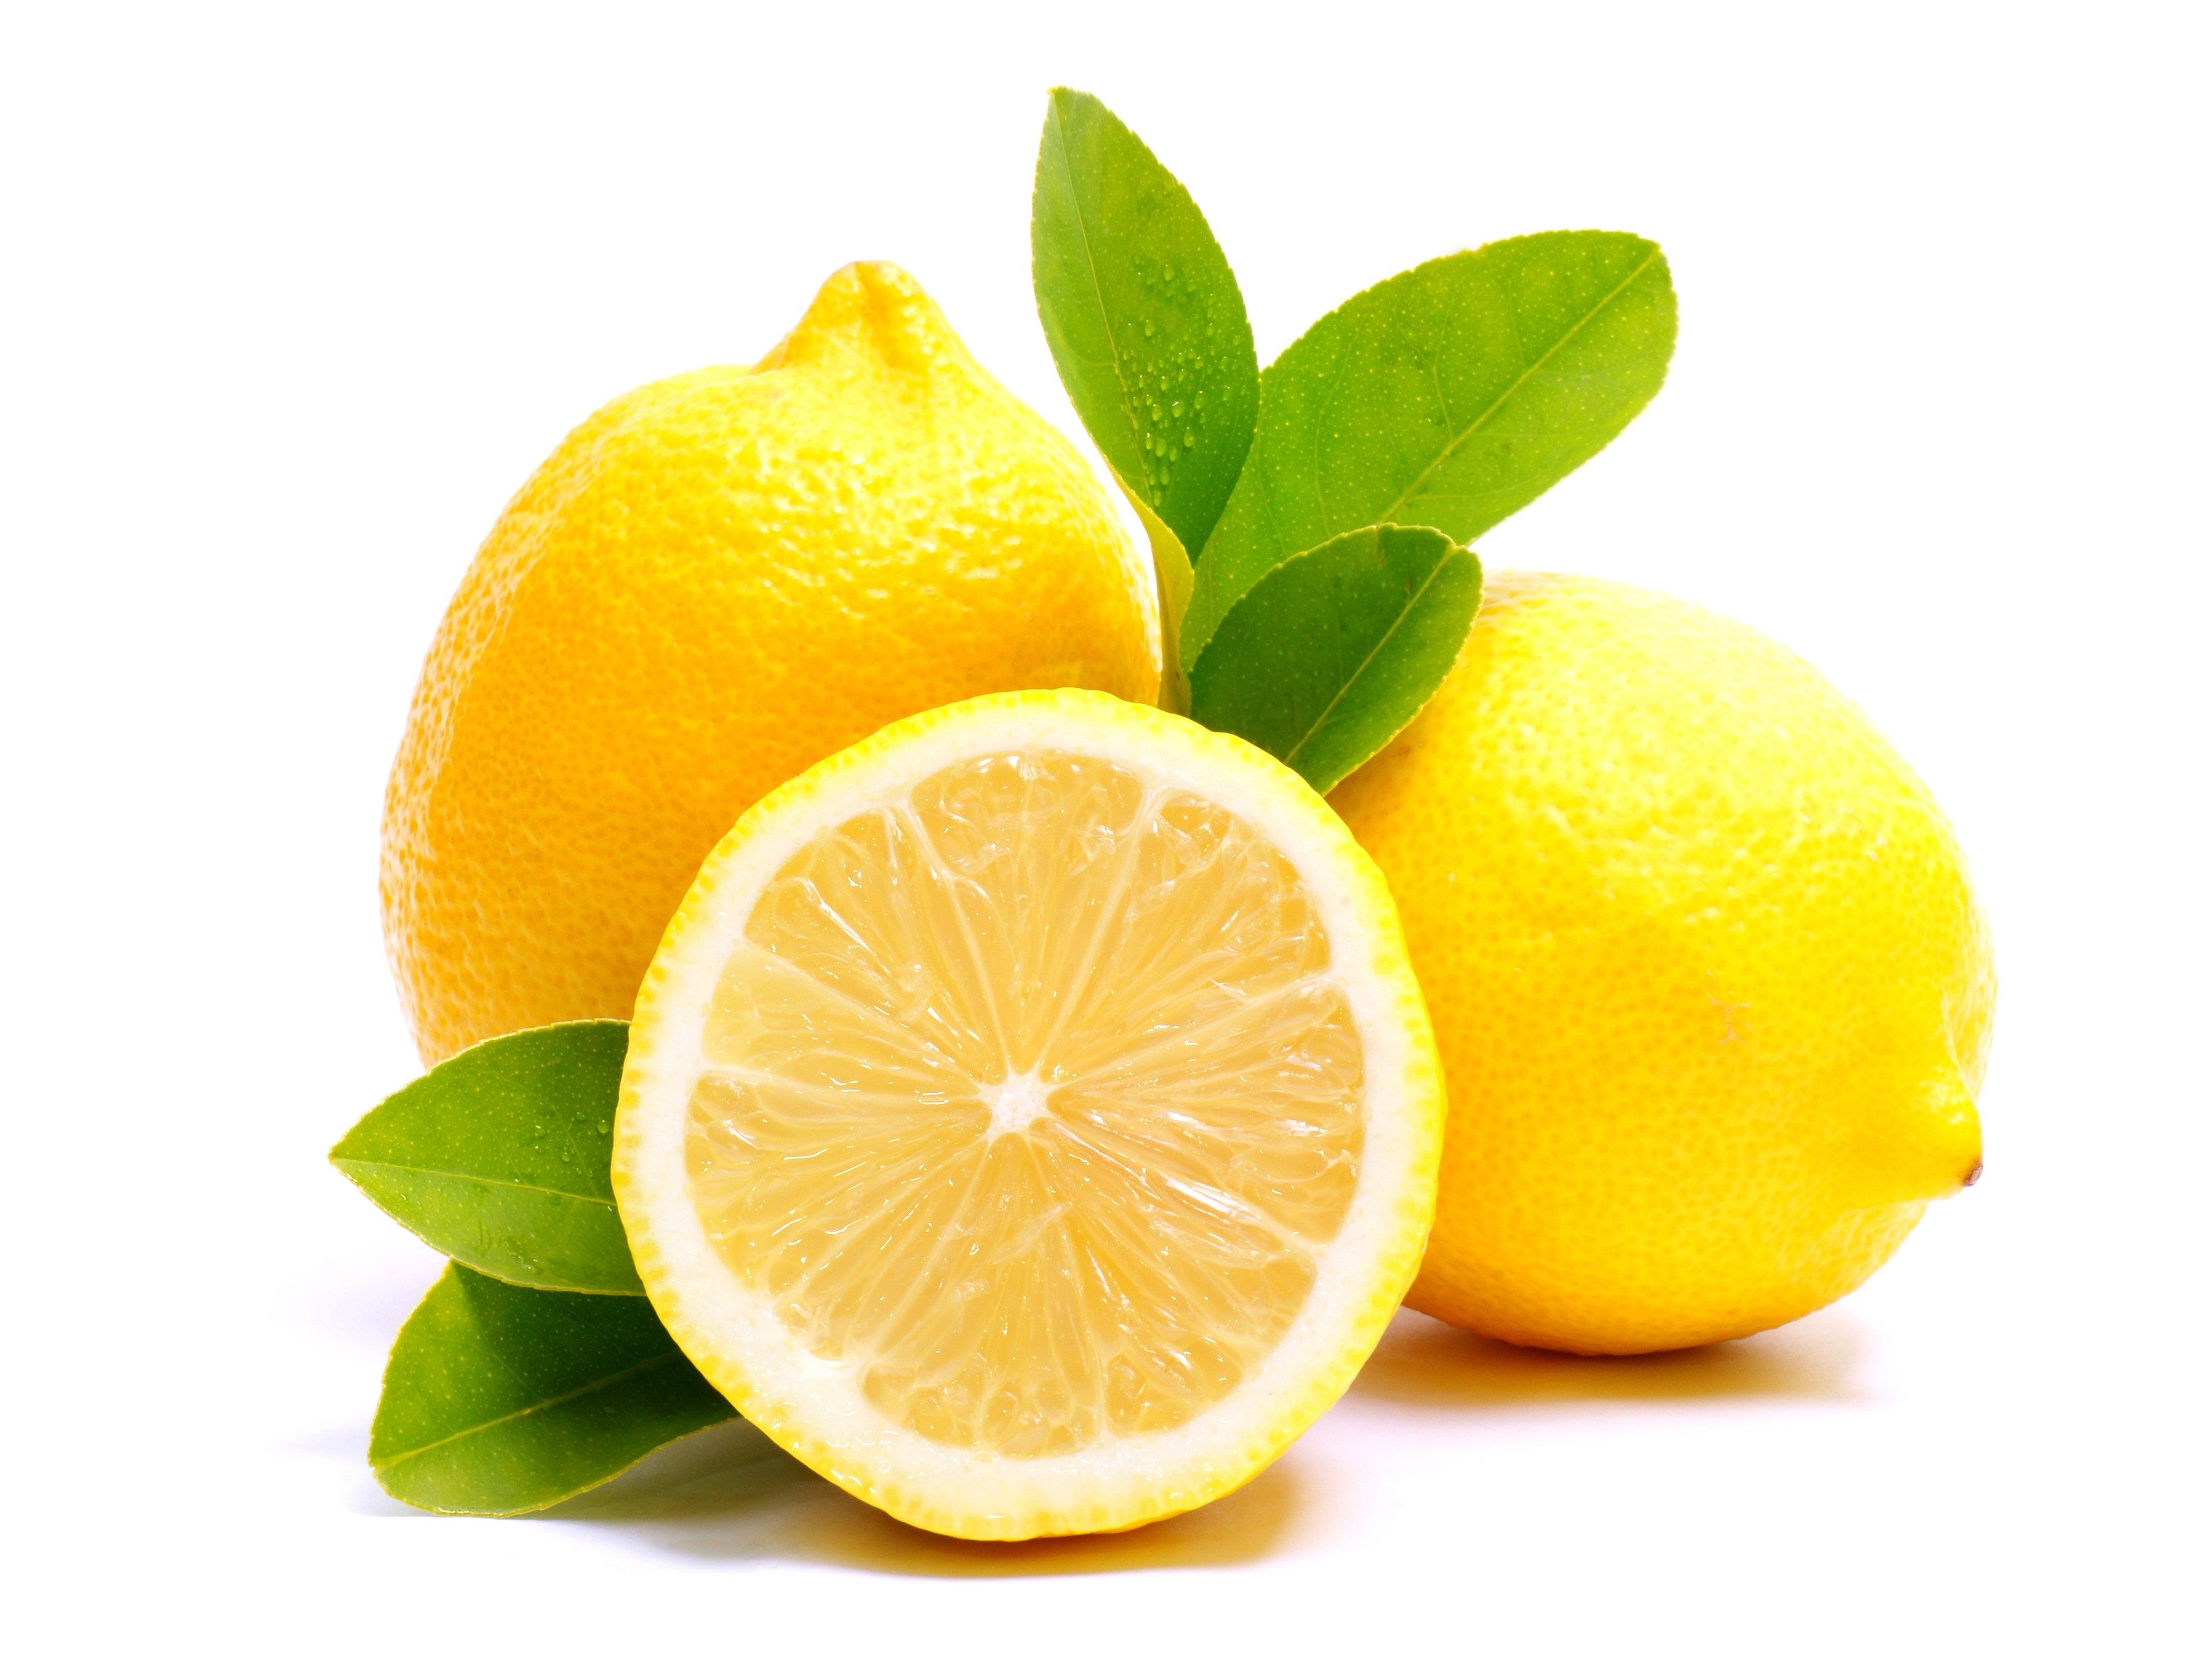 3. Suck on a lemon